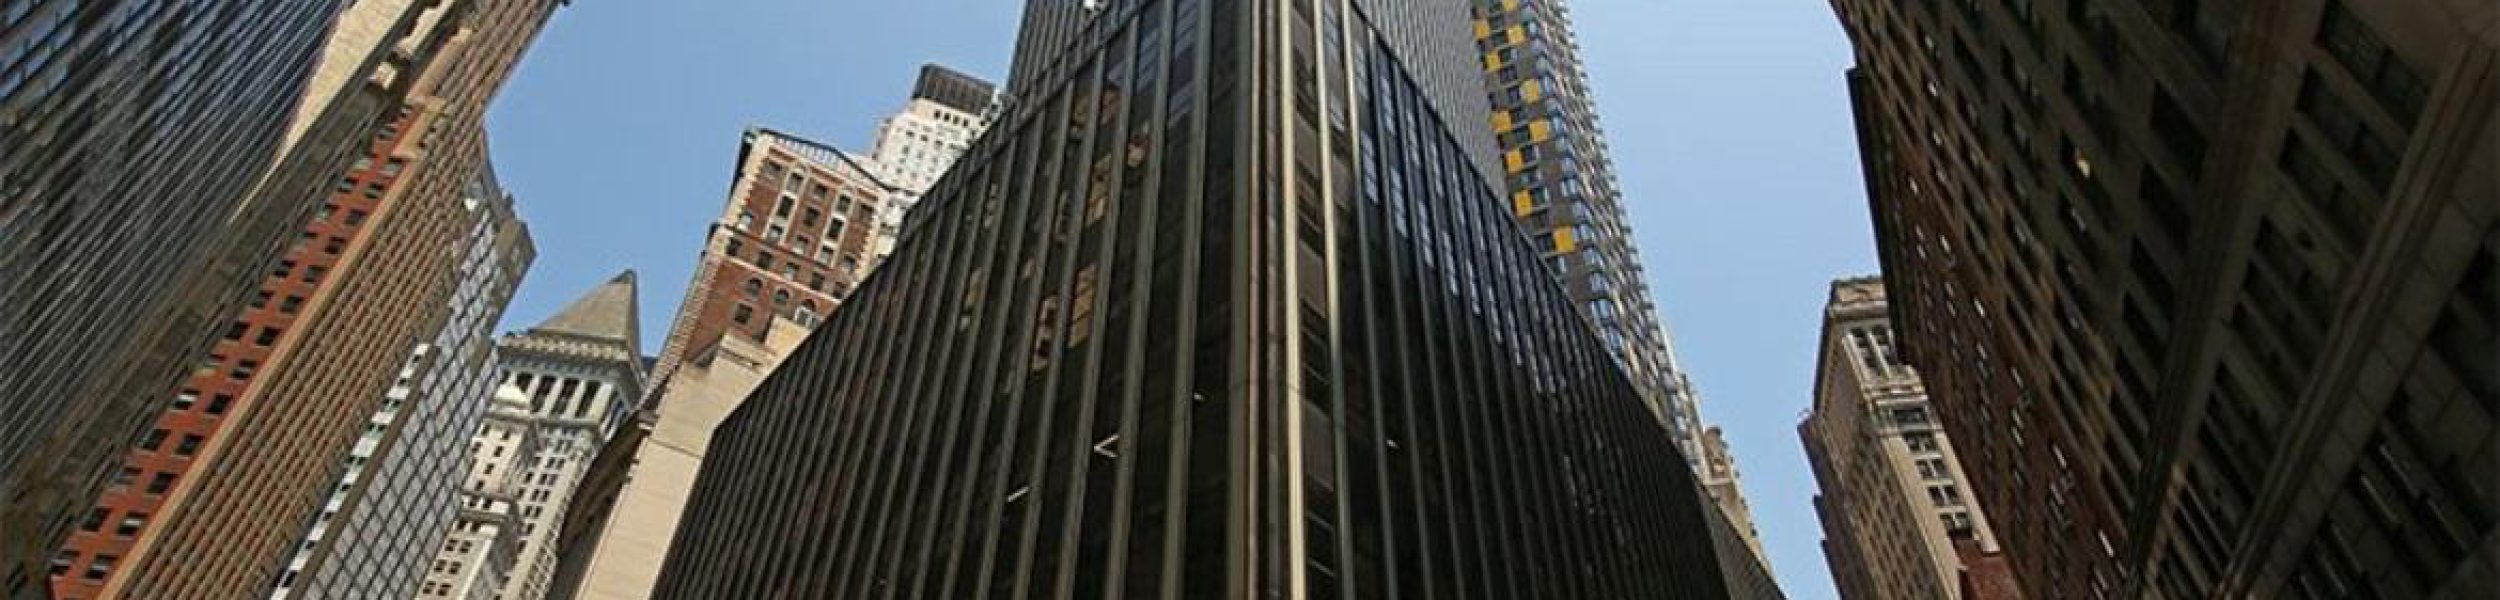 בניין broad st 55 במנהטן (צילום: באדיבות Silverstein Properties)